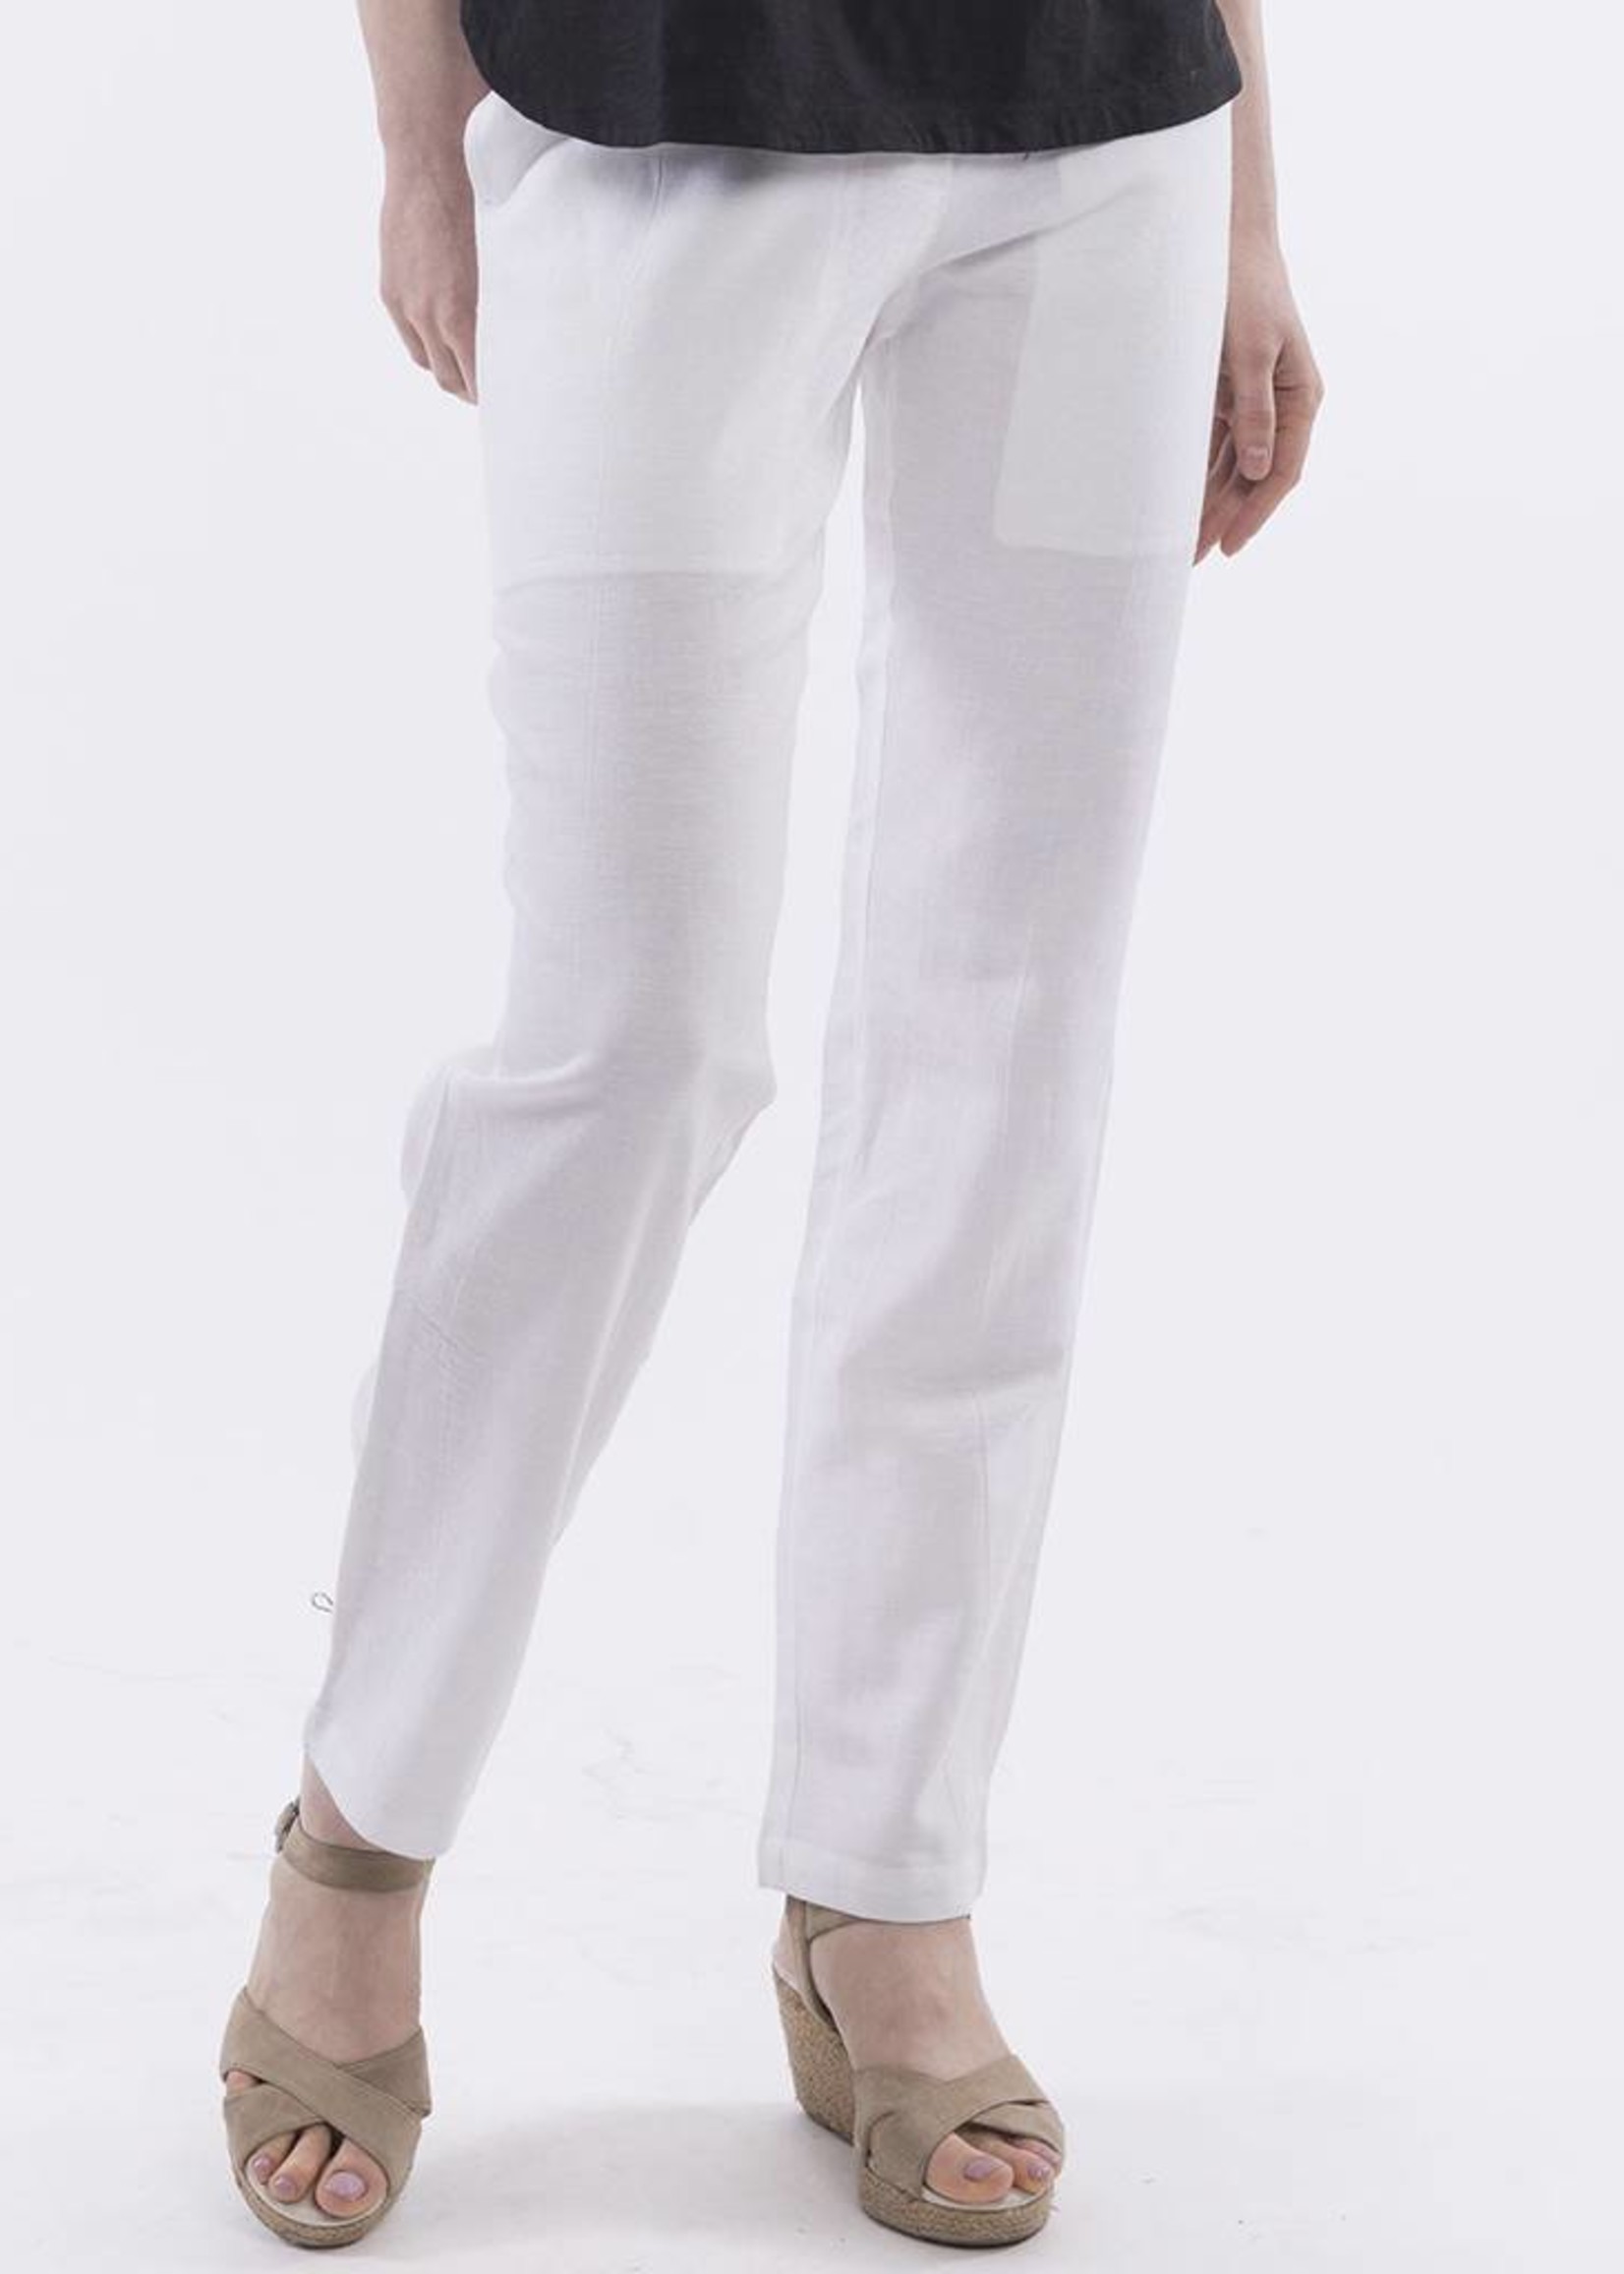 Orientique Women's Linen Capri Pants in White - Fe's Fashion & Decor